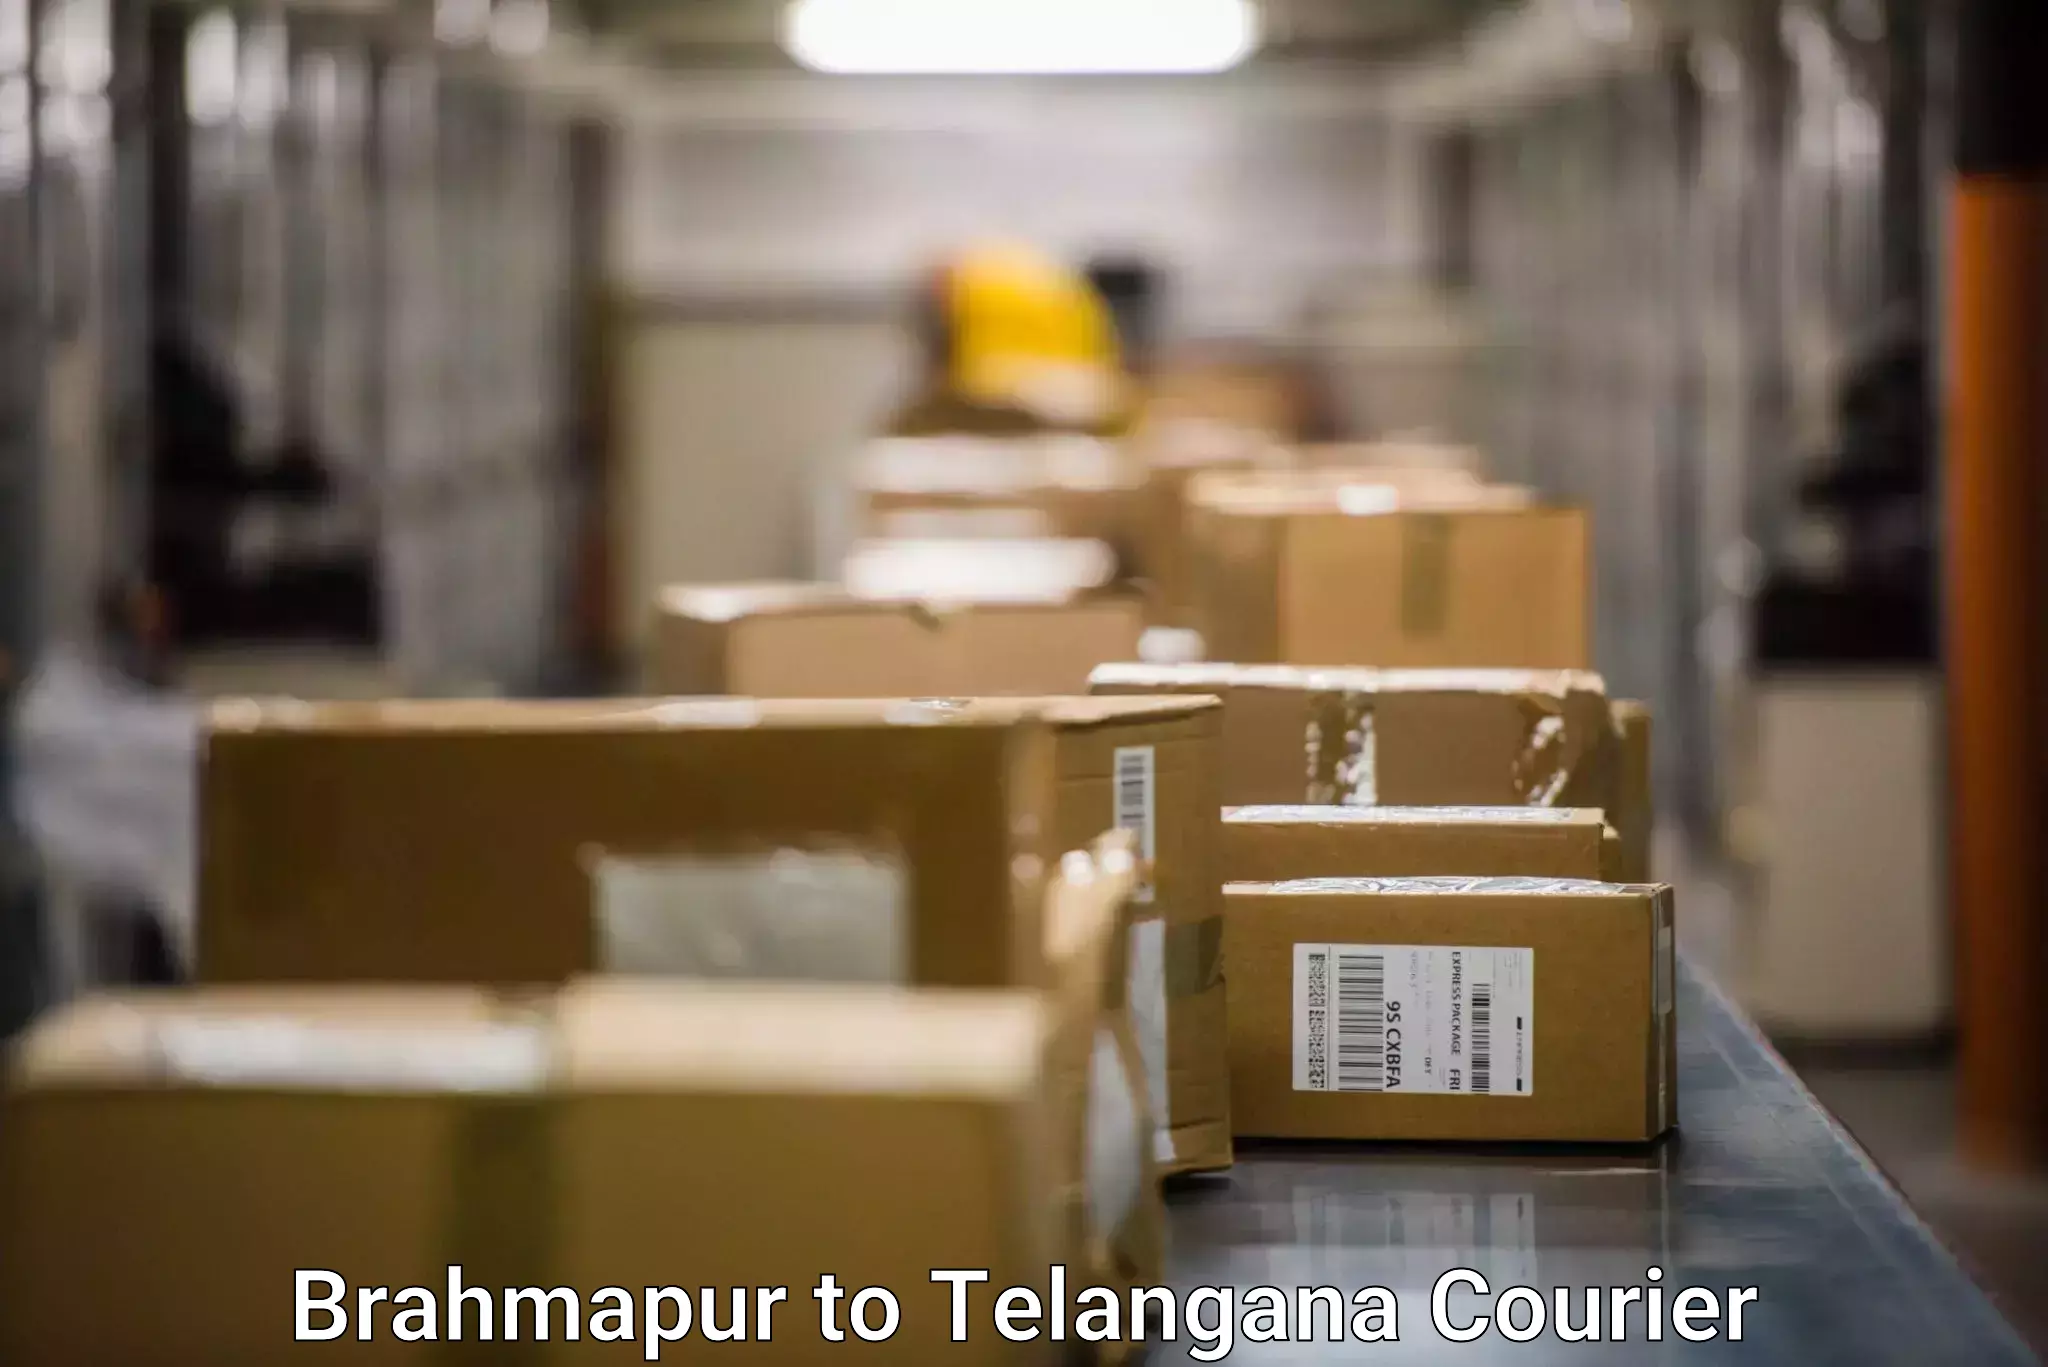 Courier services in Brahmapur to Pregnapur